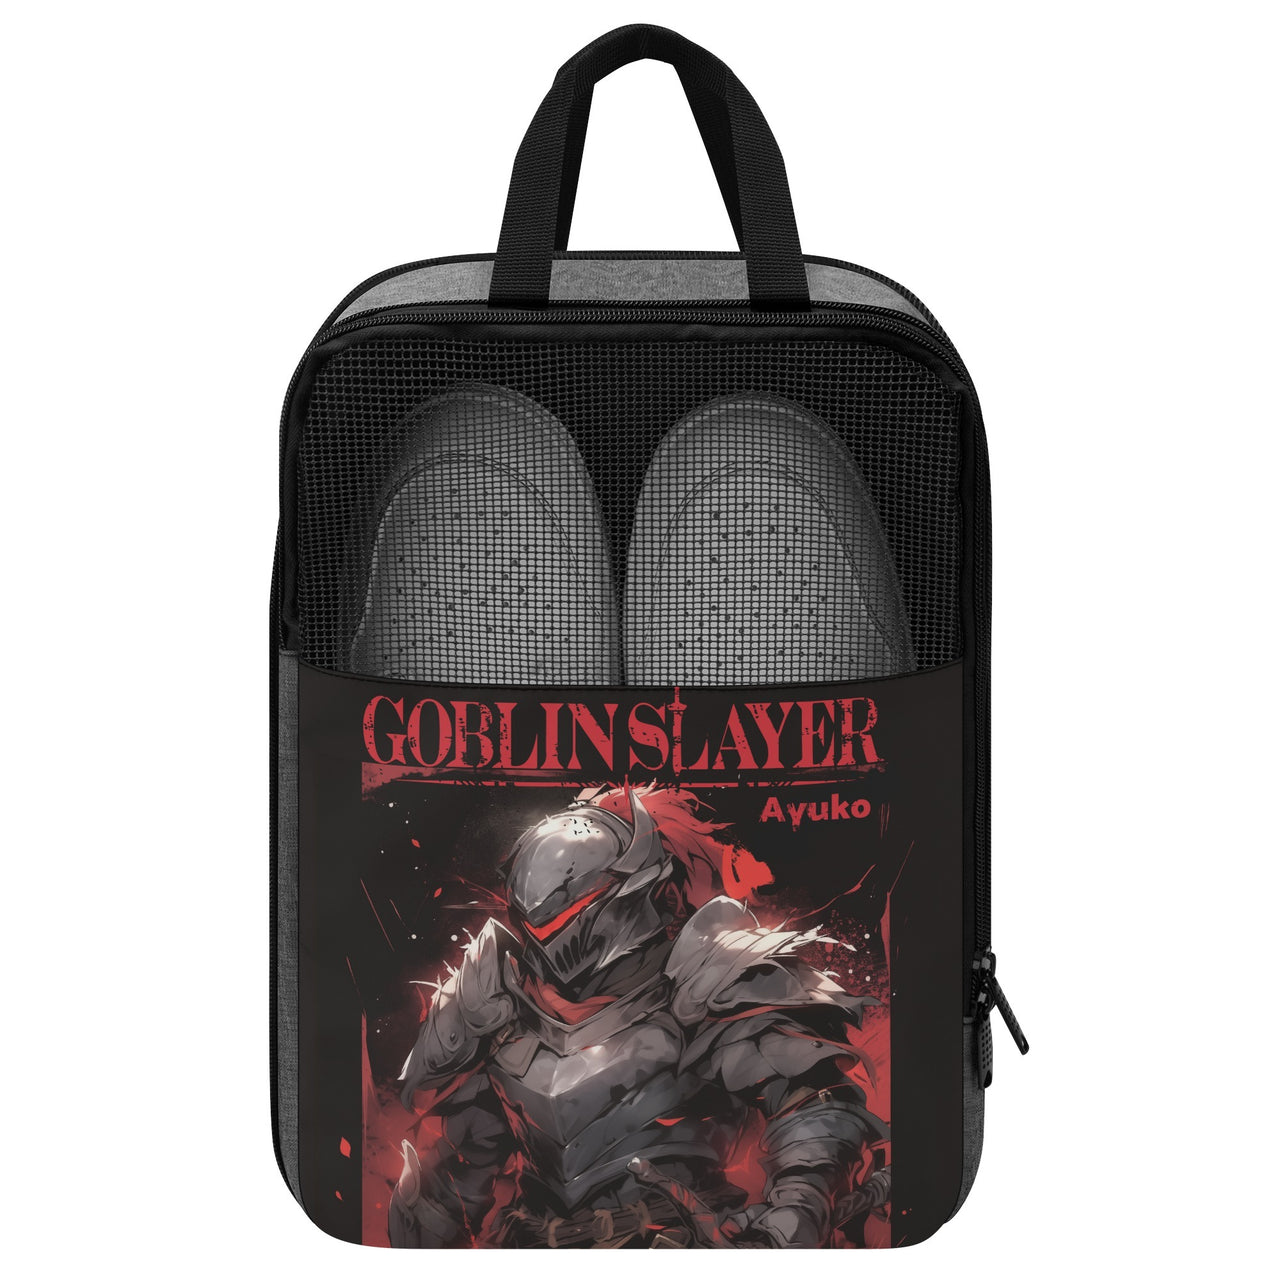 Goblin Slayer Anime Shoe Bag